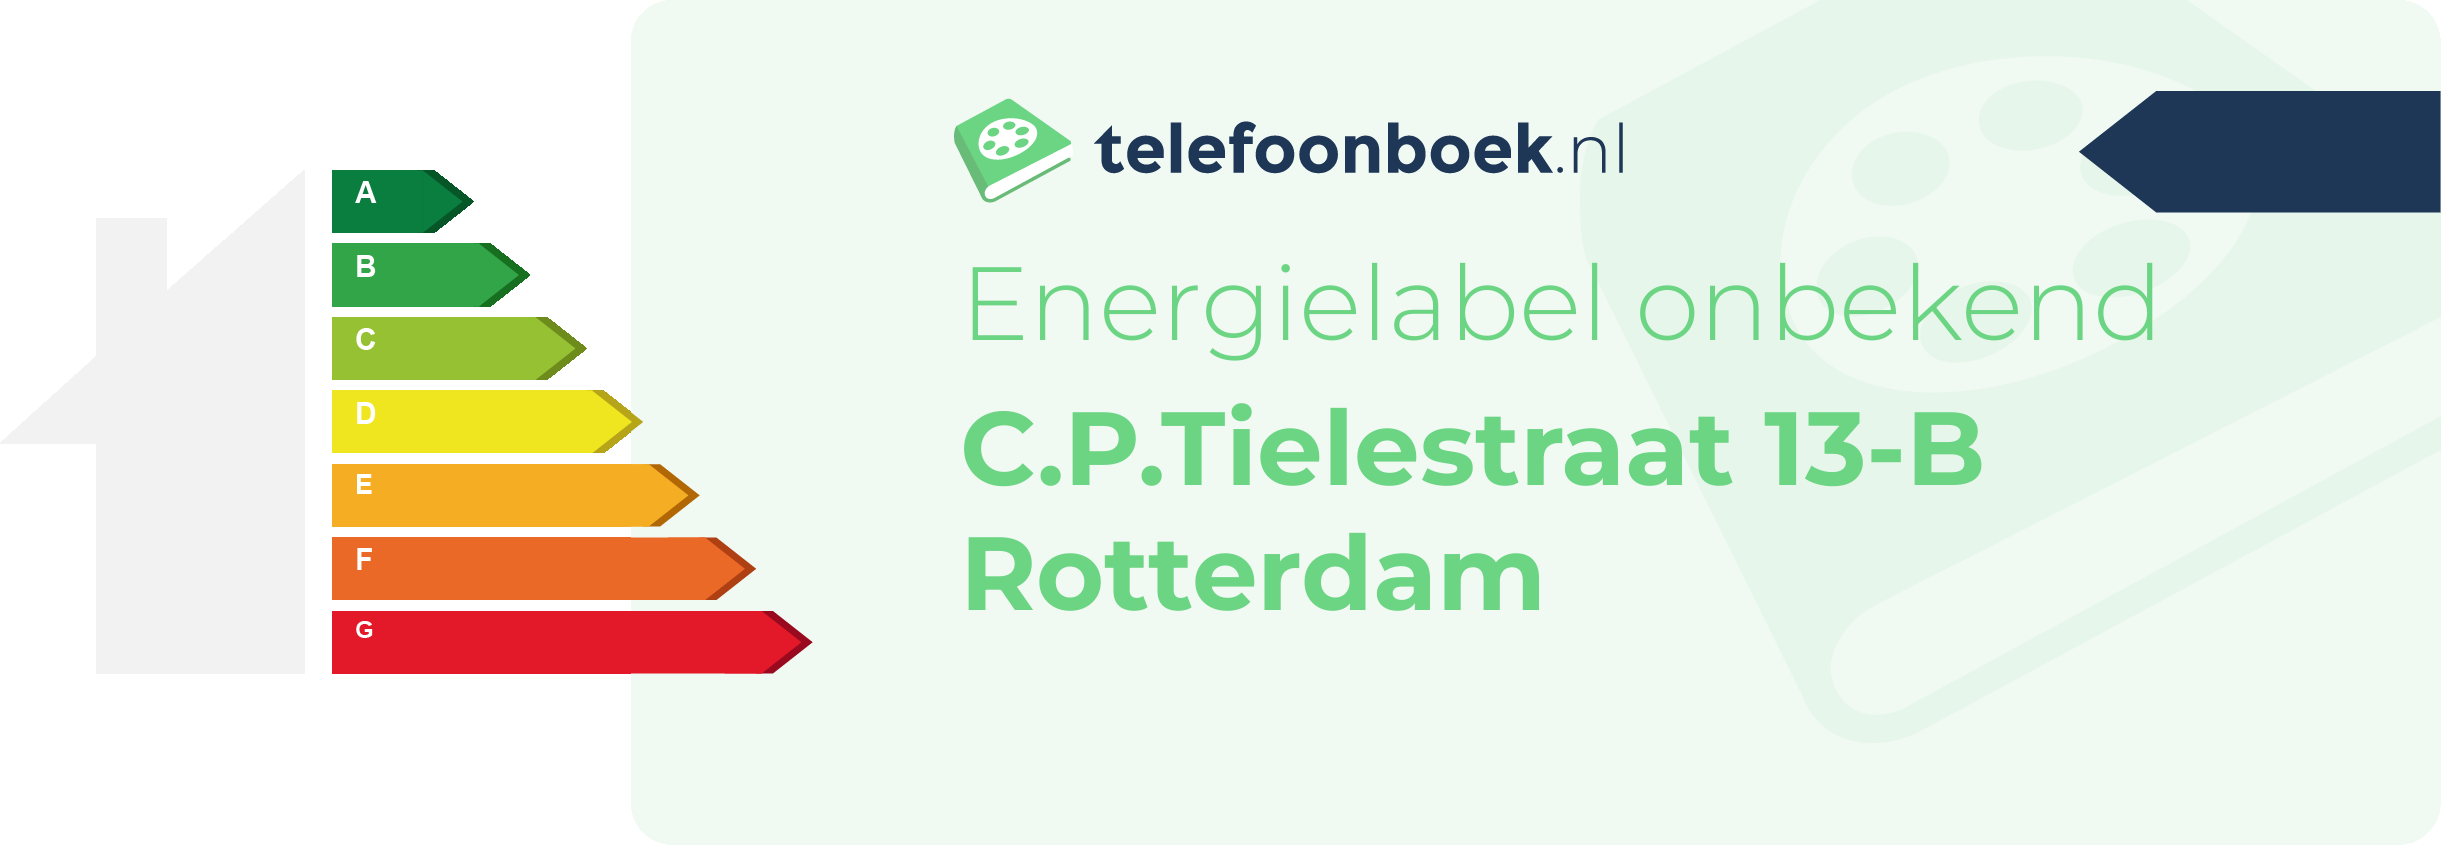 Energielabel C.P.Tielestraat 13-B Rotterdam